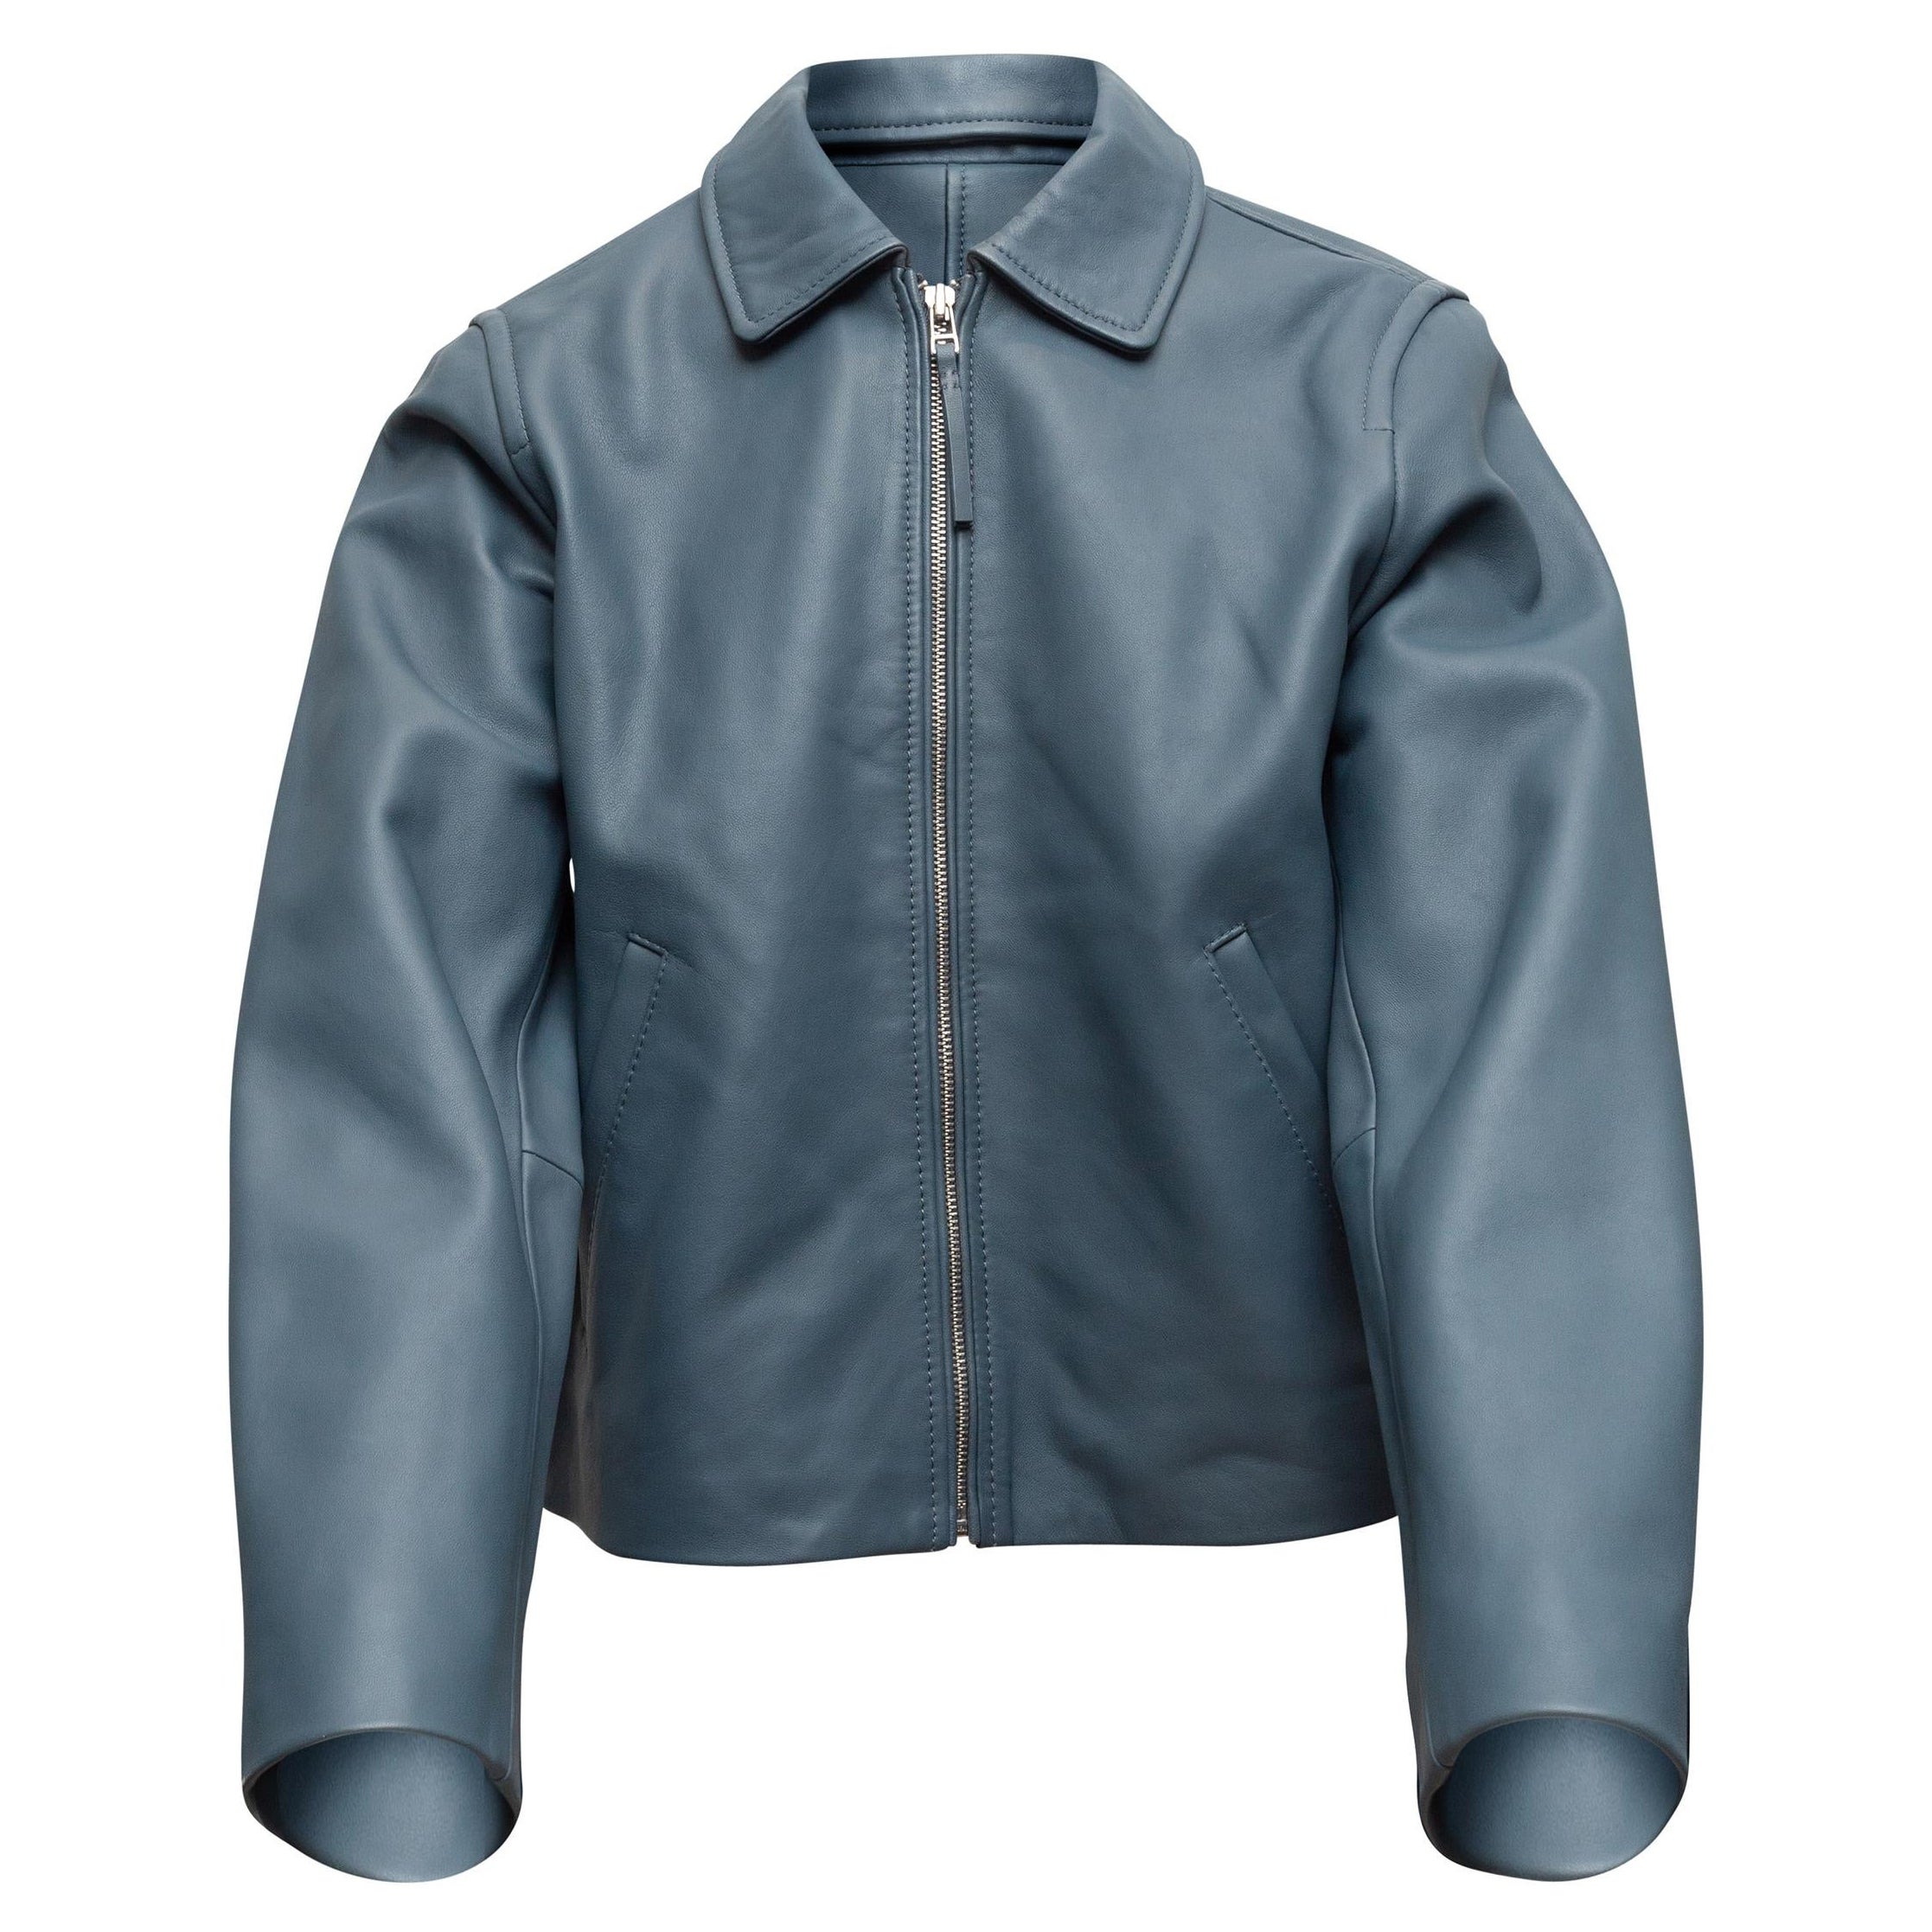 Everlane Storm Blue Leather Zip Jacket